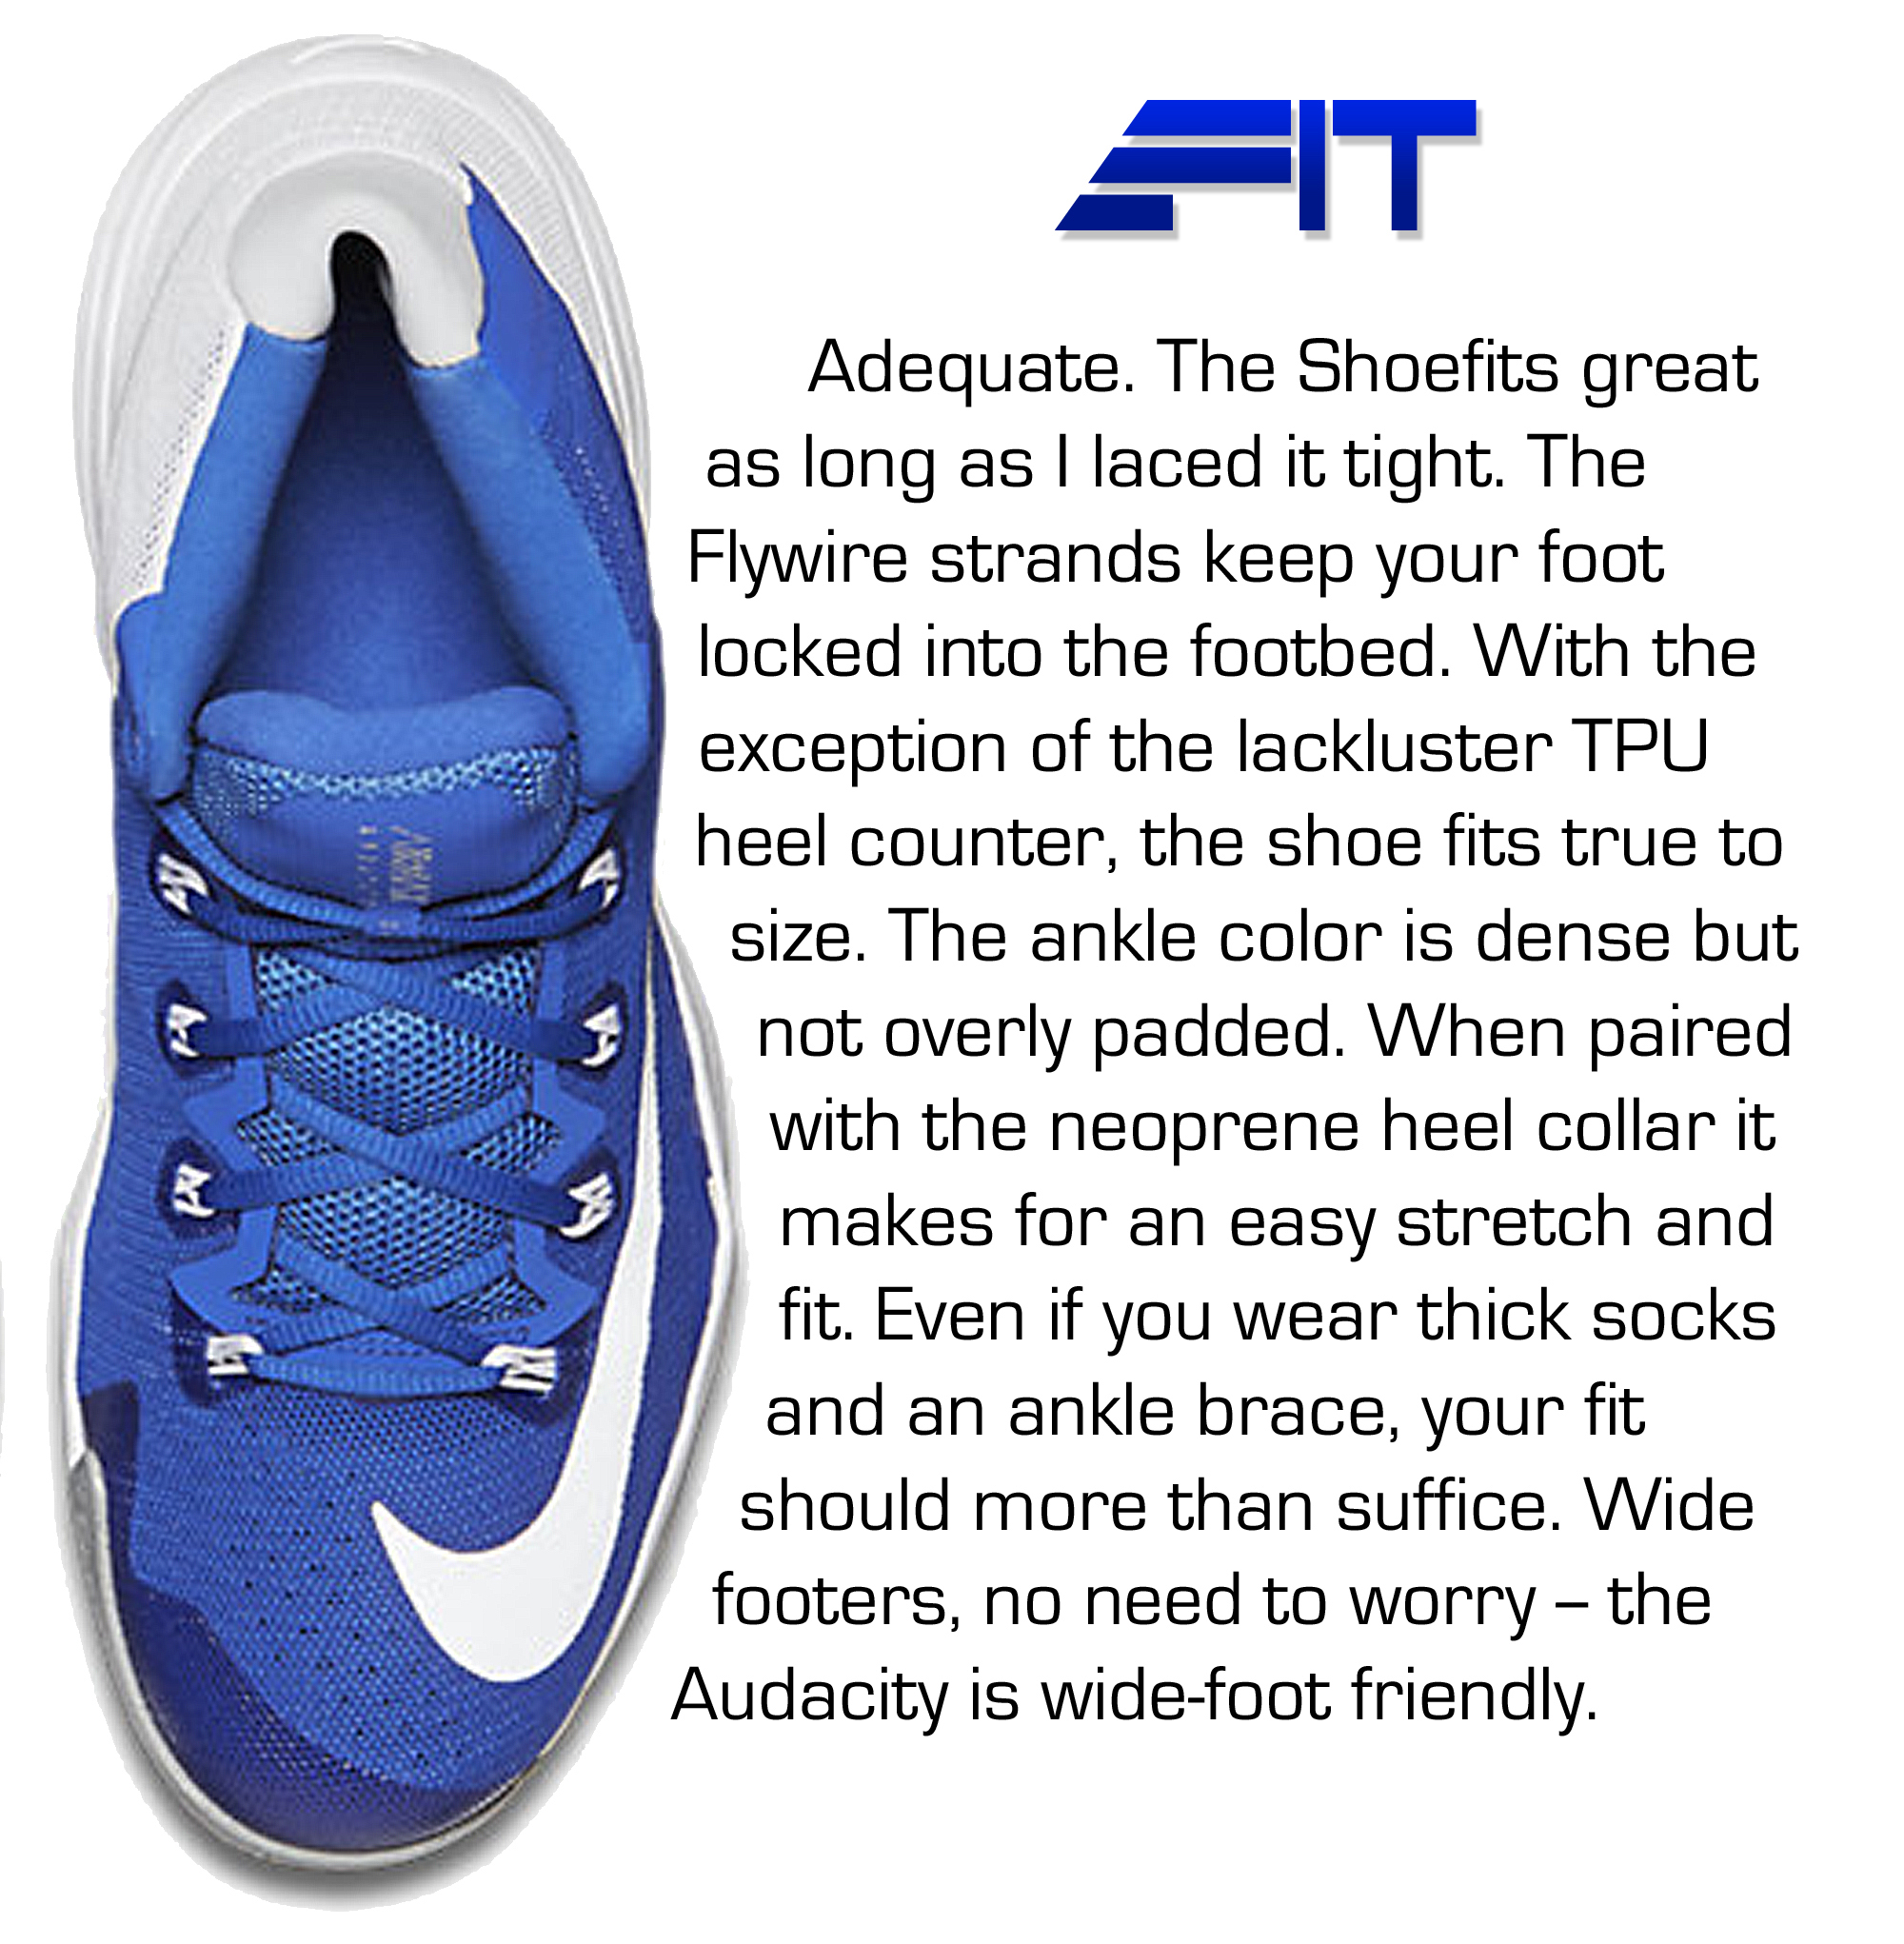 Nike Air Max Audacity - Fit